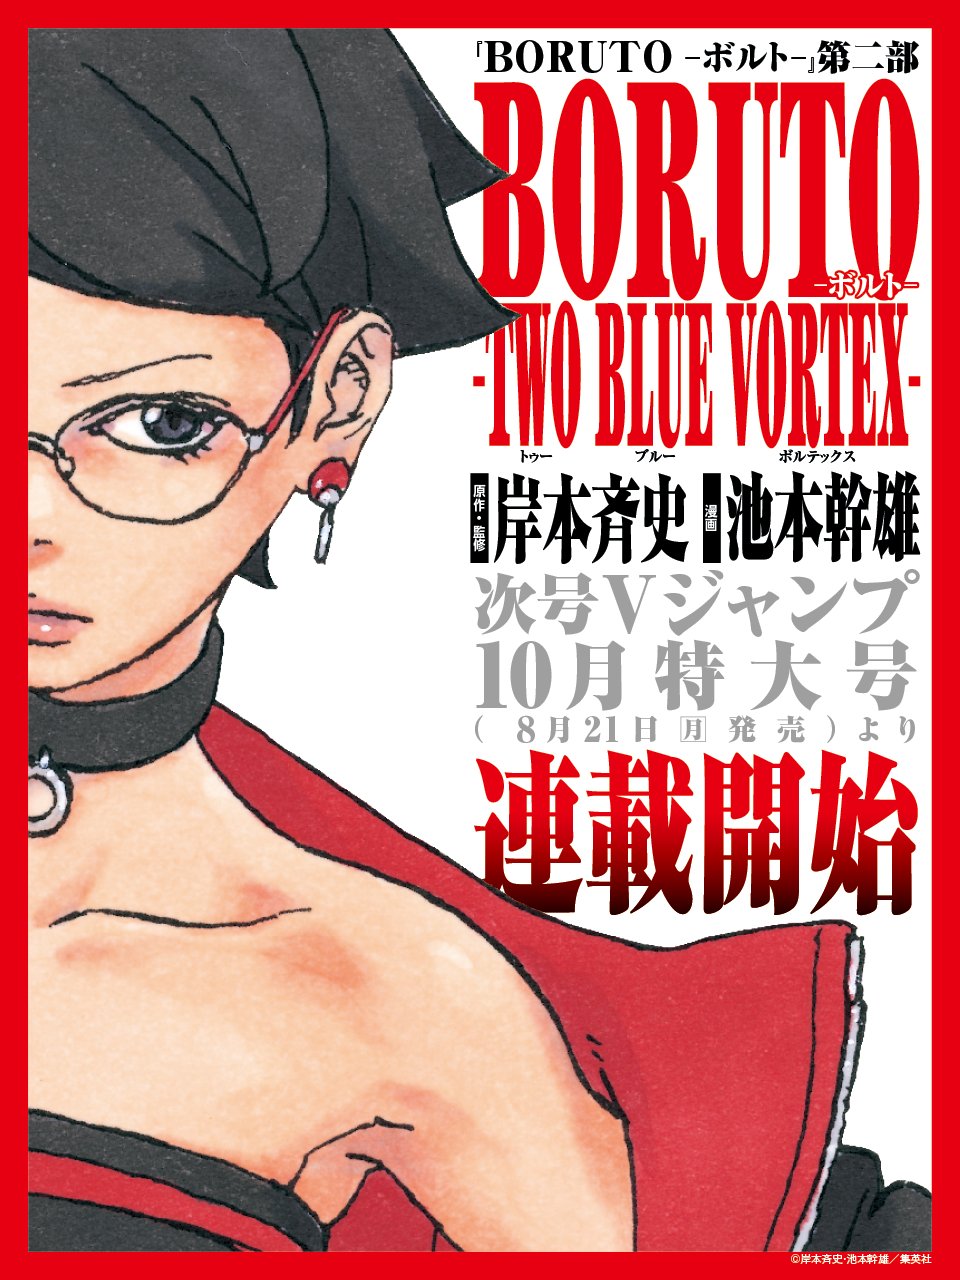 Boruto: Two Blue Vortex (Manga Part 2) main character designs revealed.